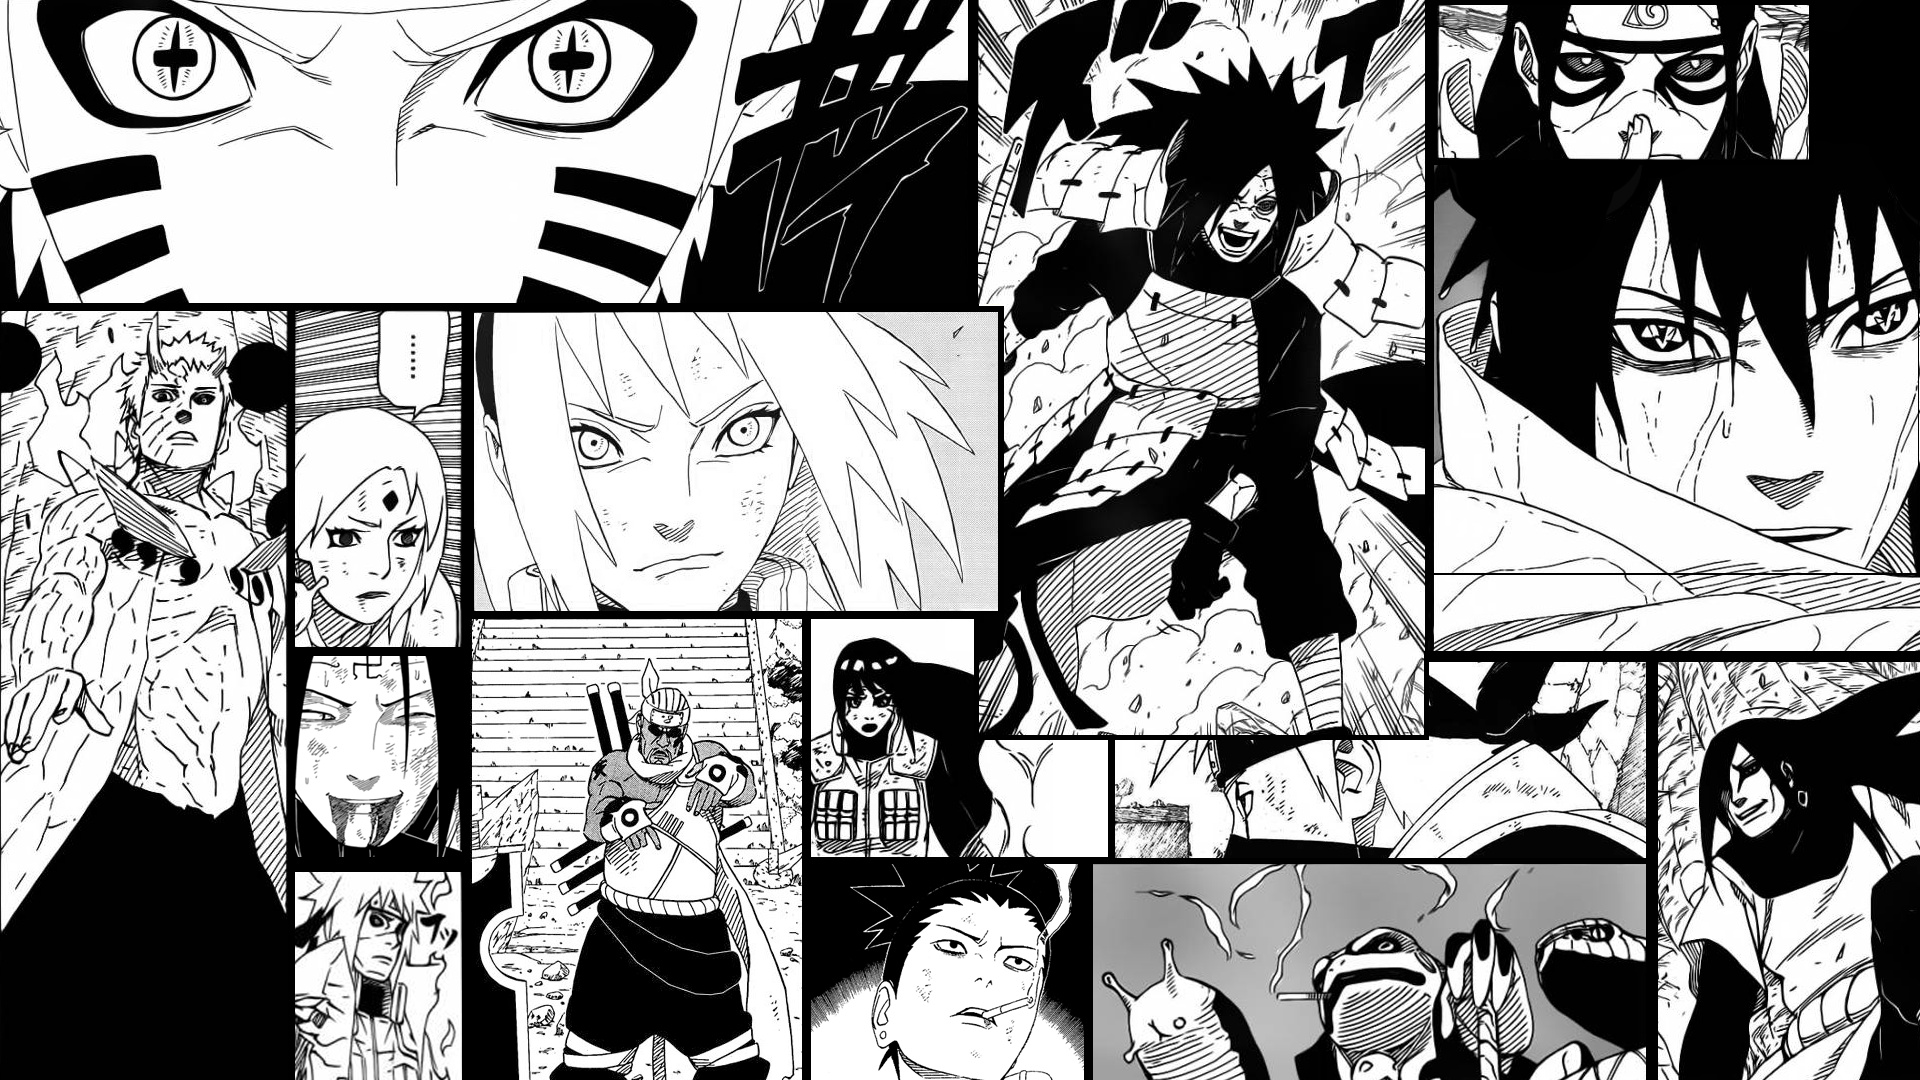 Naruto manga wallpaper, ThatAwesomeDudeYeaah, Desktop mobile tablet, Free anime wallpapers, 1920x1080 Full HD Desktop